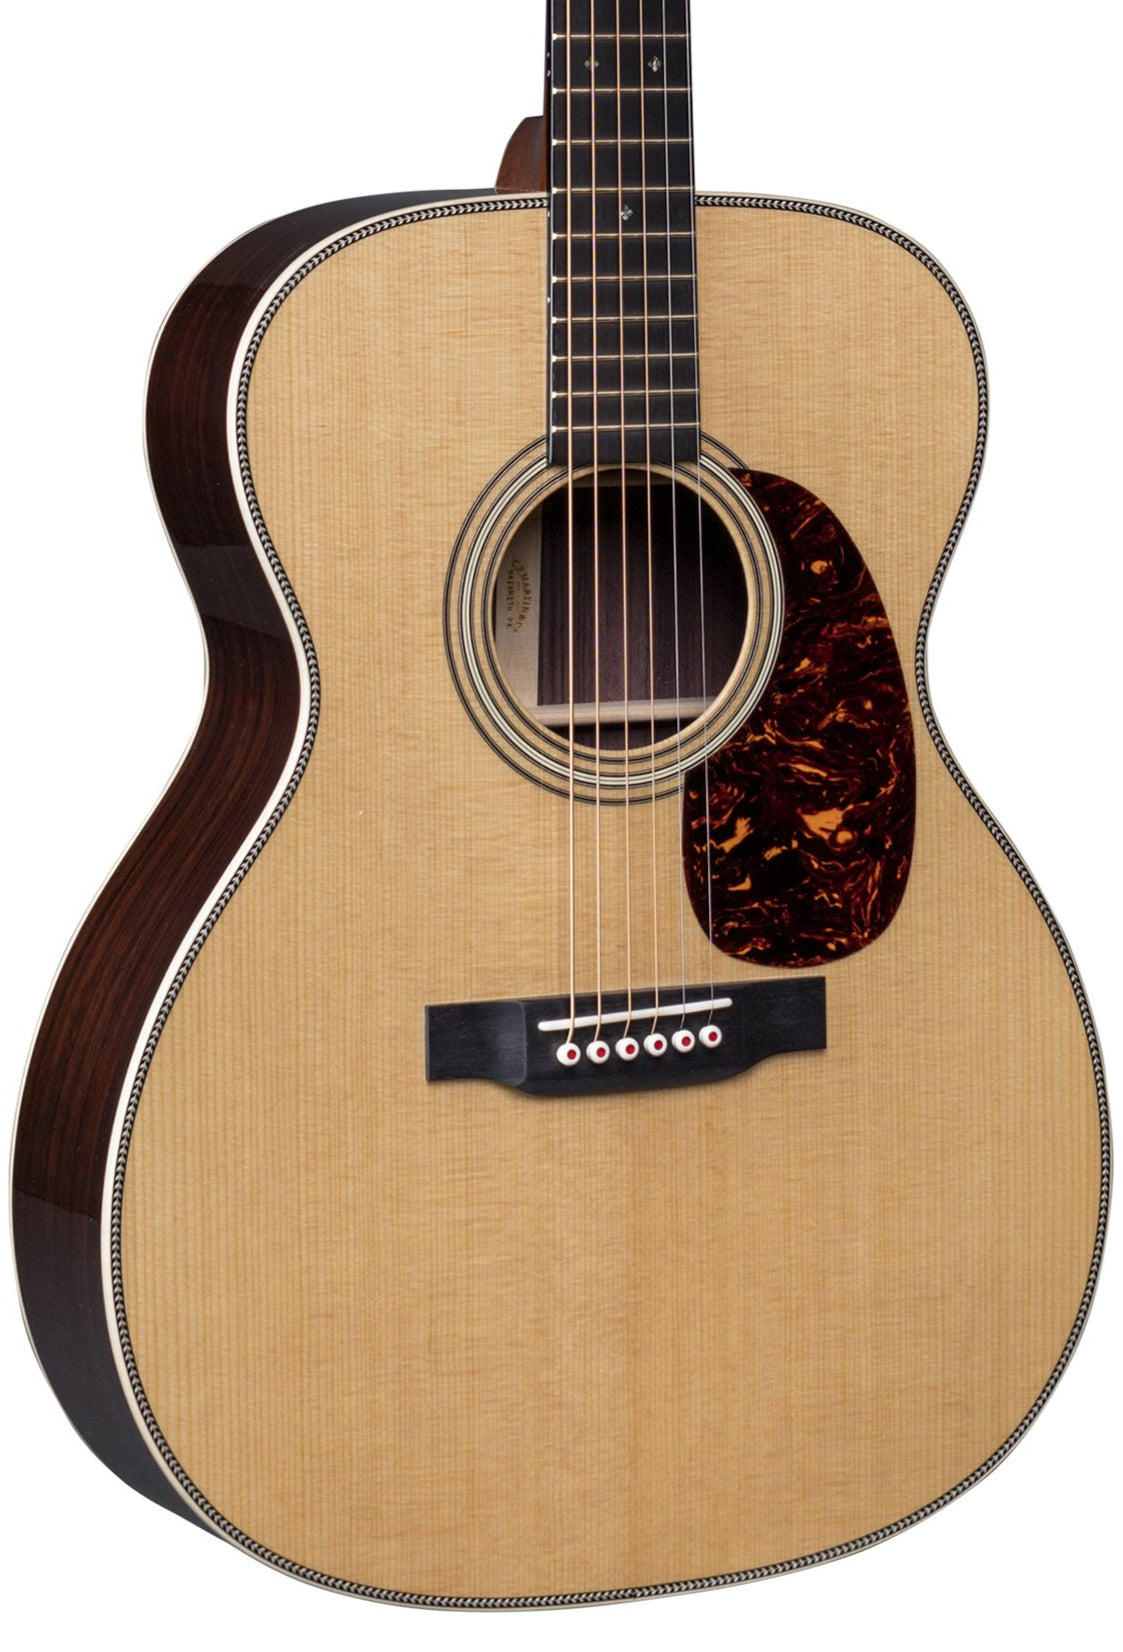 Martin 000-28 Modern Deluxe Guitar